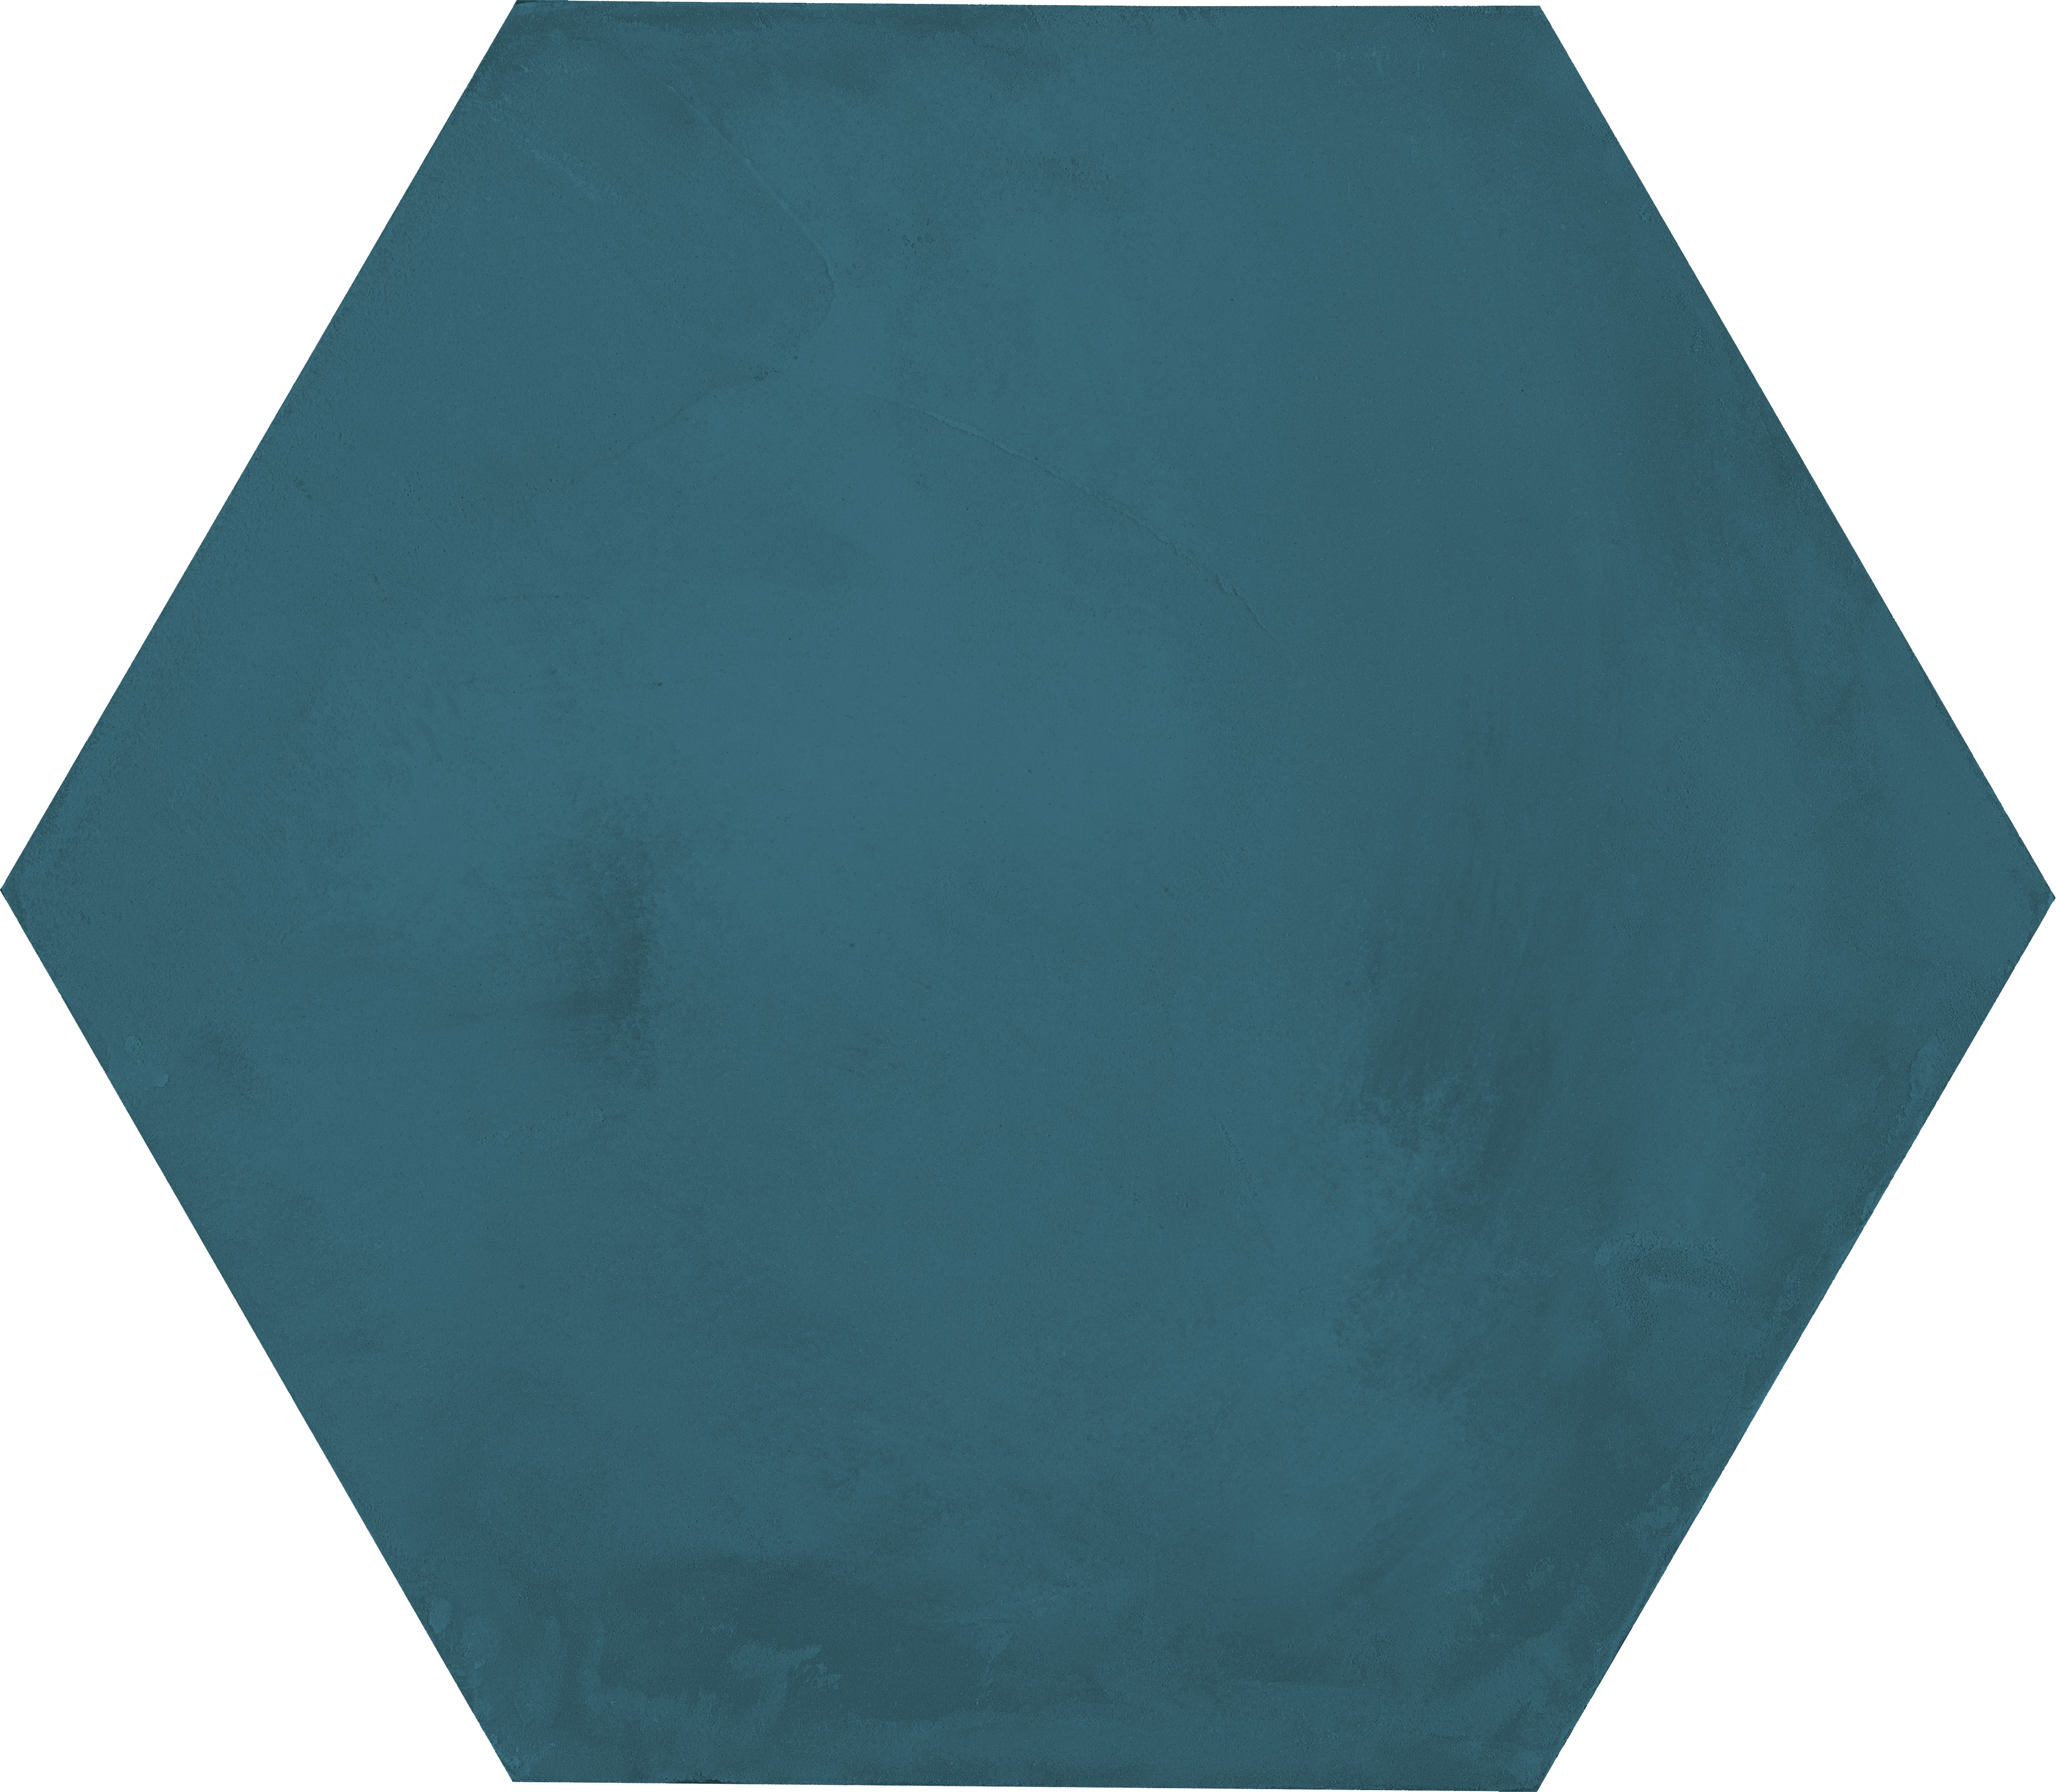 Marcacorona Oceano Naturale – Matt Oceano I406 matt natur 21,6x25cm Esagona 9mm